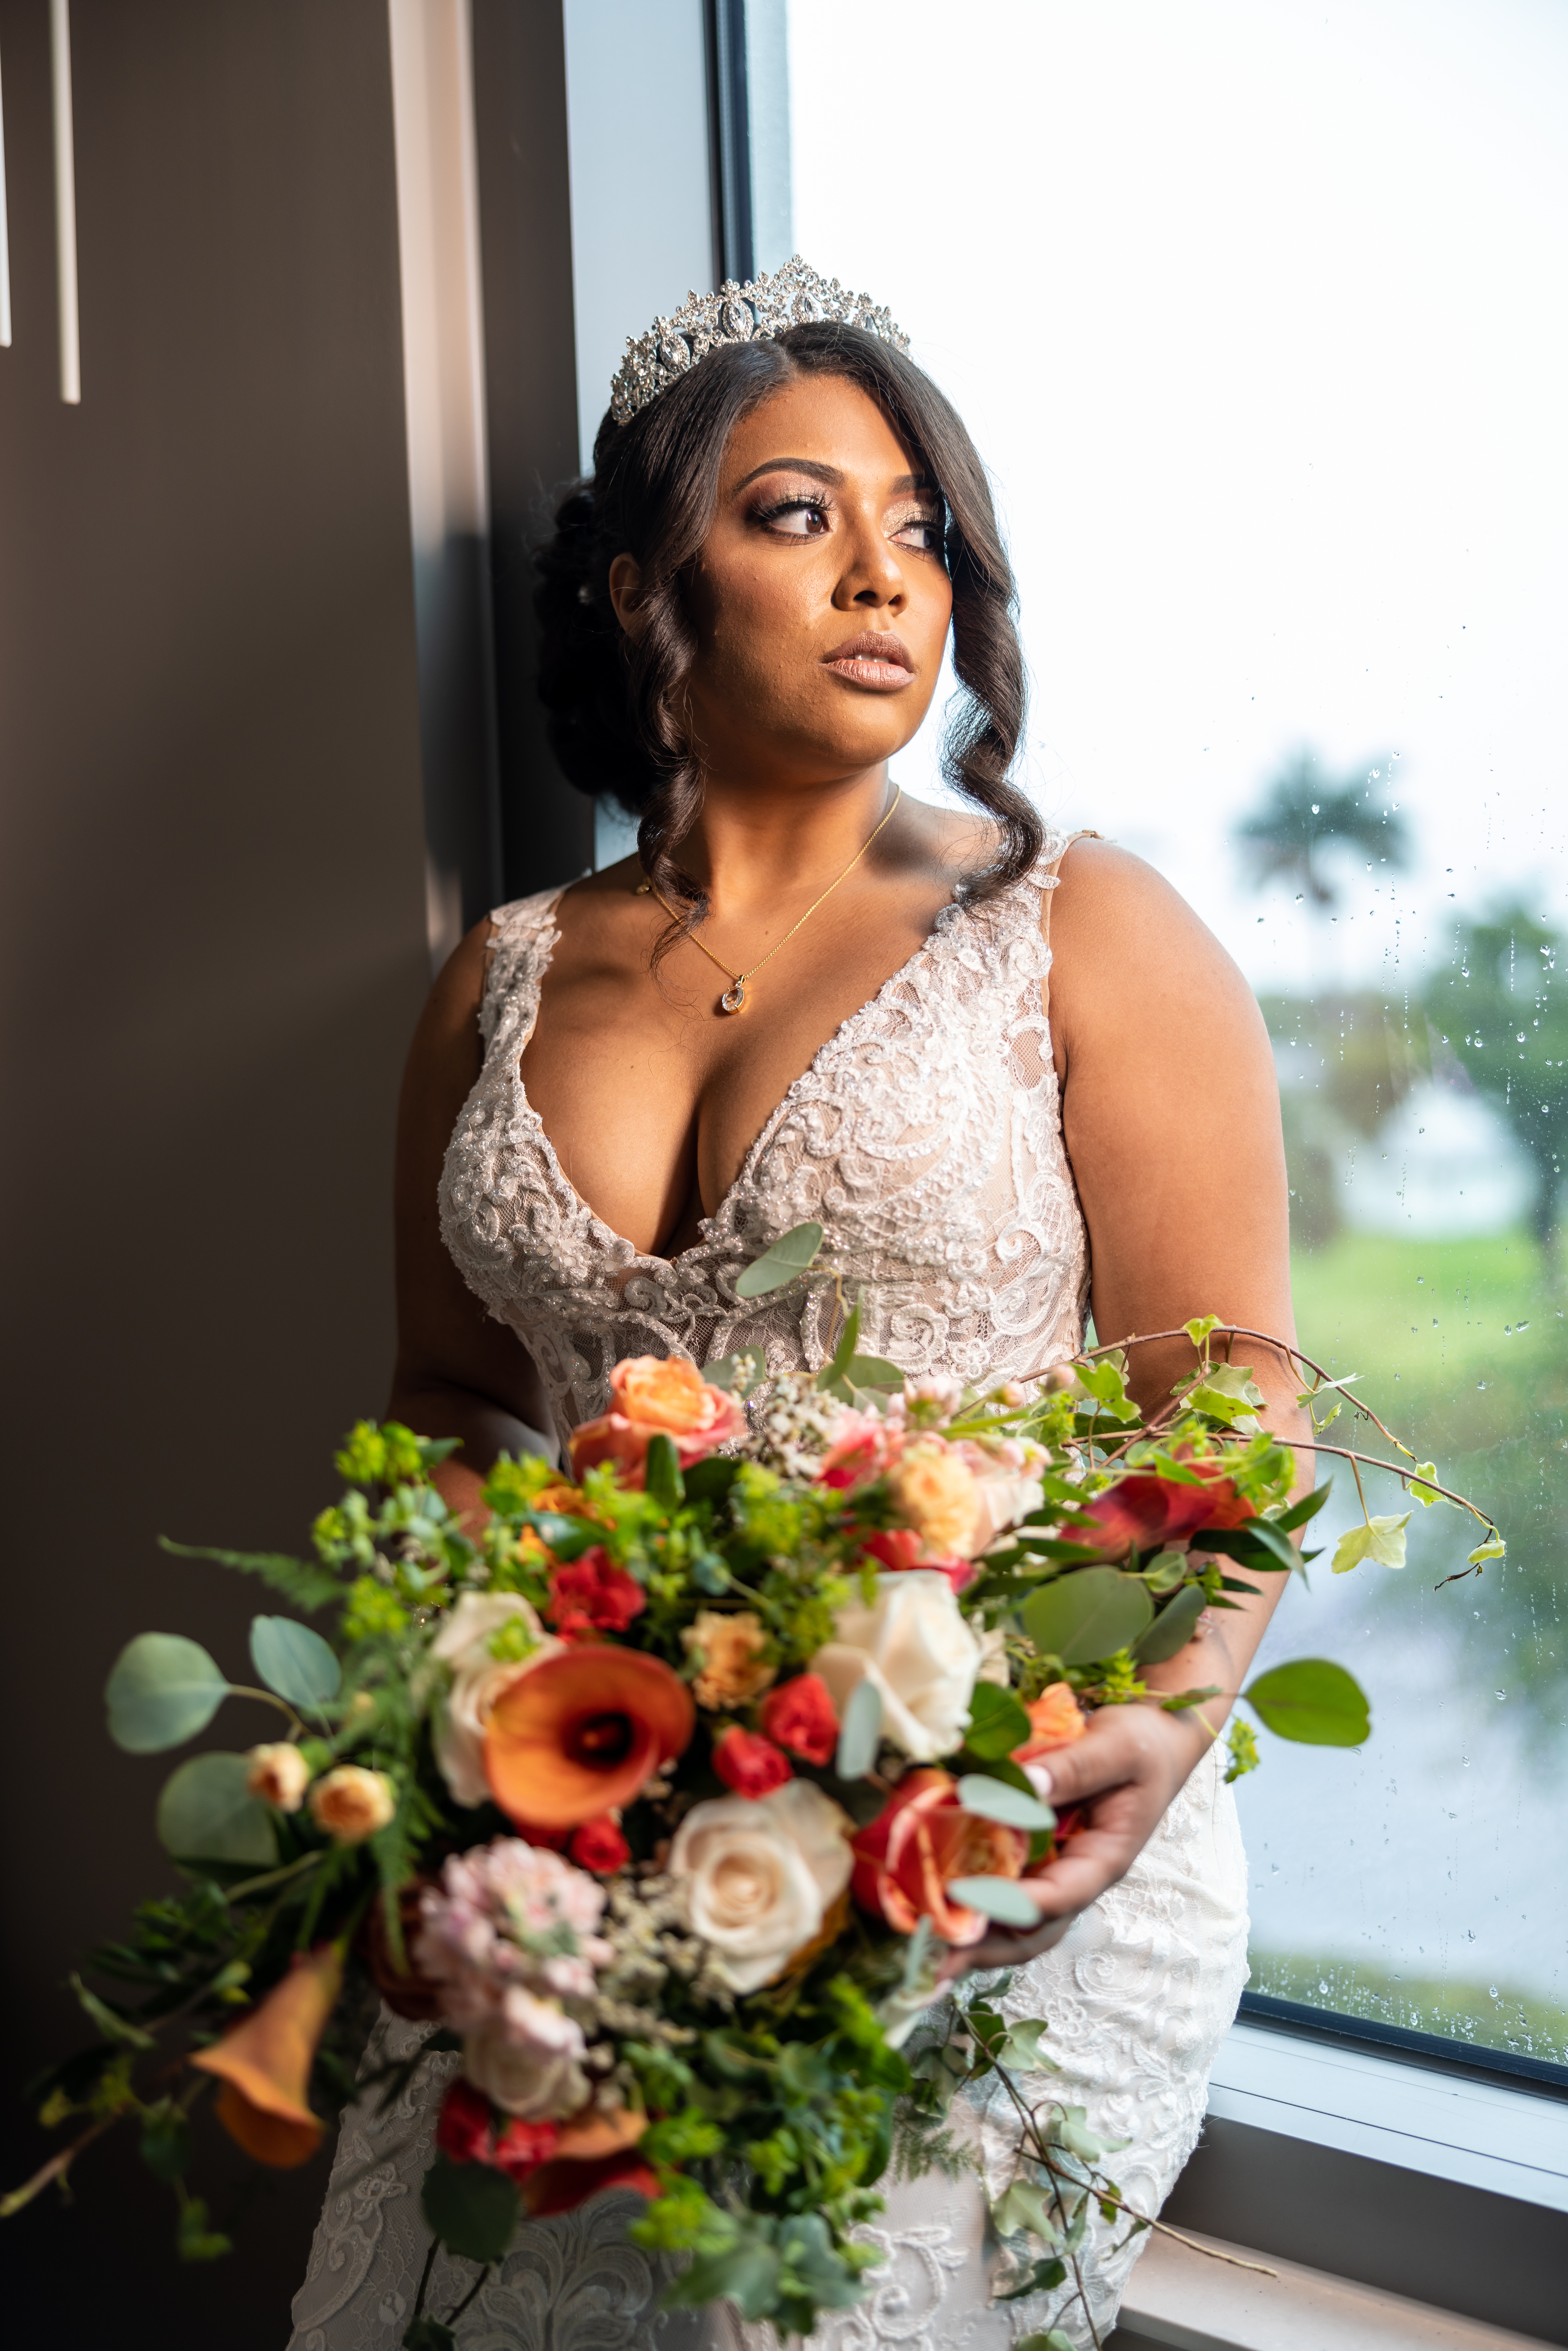 Nigerian American Love Bridal Fashion Unveiled in Multicultural Splendor